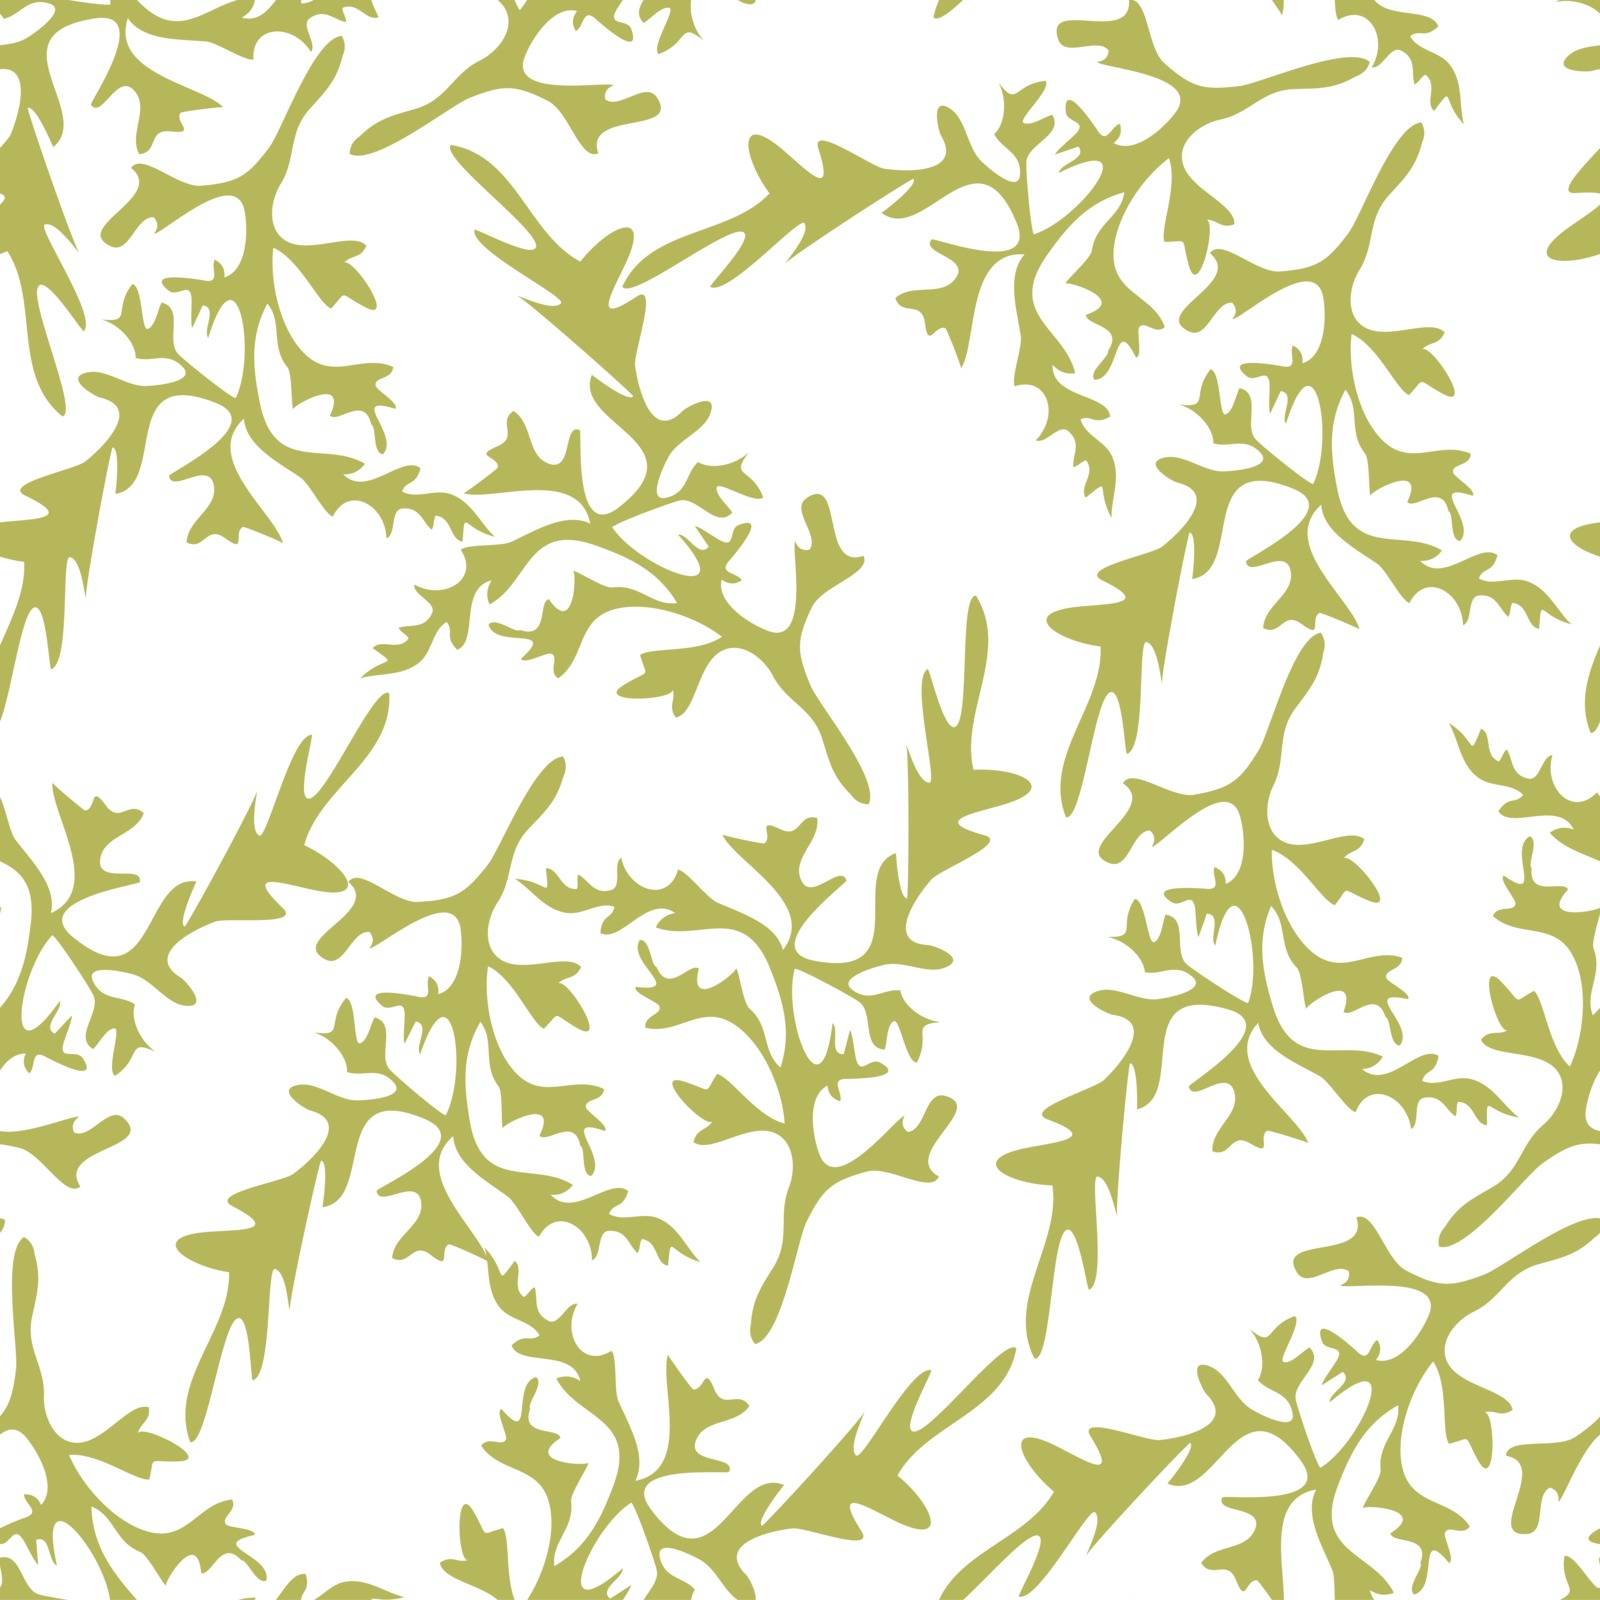 Green  leaves seamless background. vector design illustration.